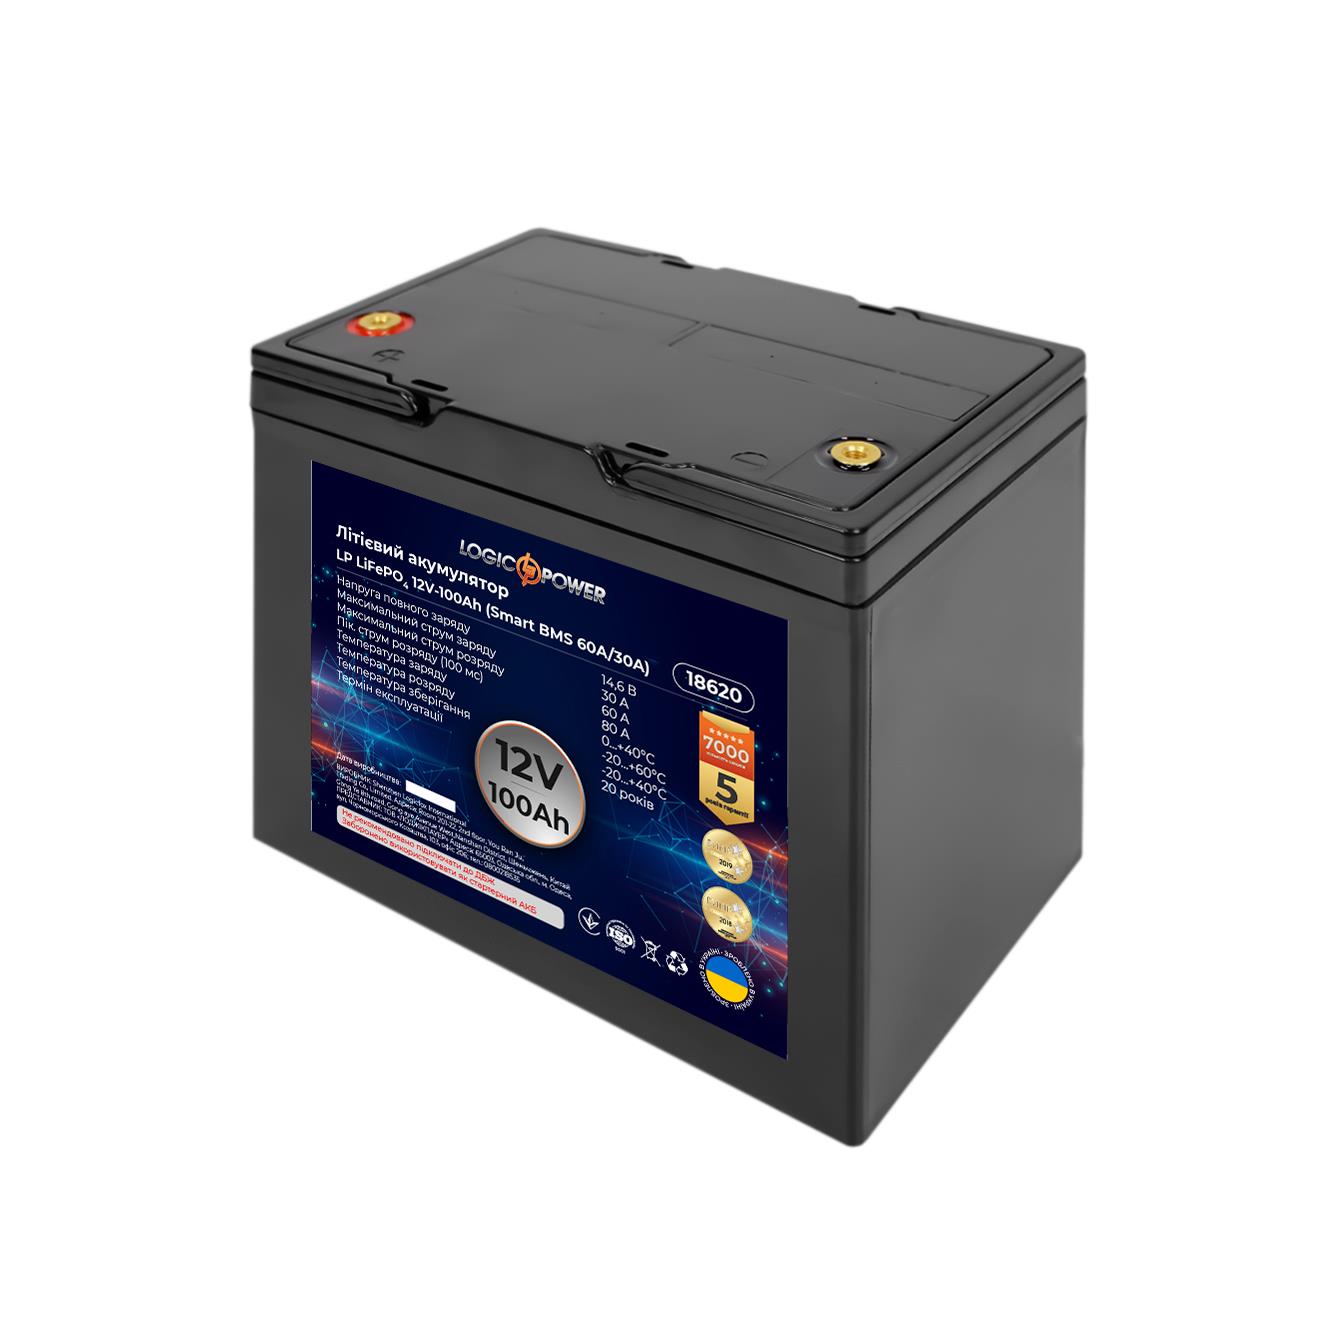 Аккумулятор литий-железо-фосфатный LogicPower LP LiFePO4 12V - 100 Ah (Smart BMS 60A/30А) пластик (18620) в интернет-магазине, главное фото